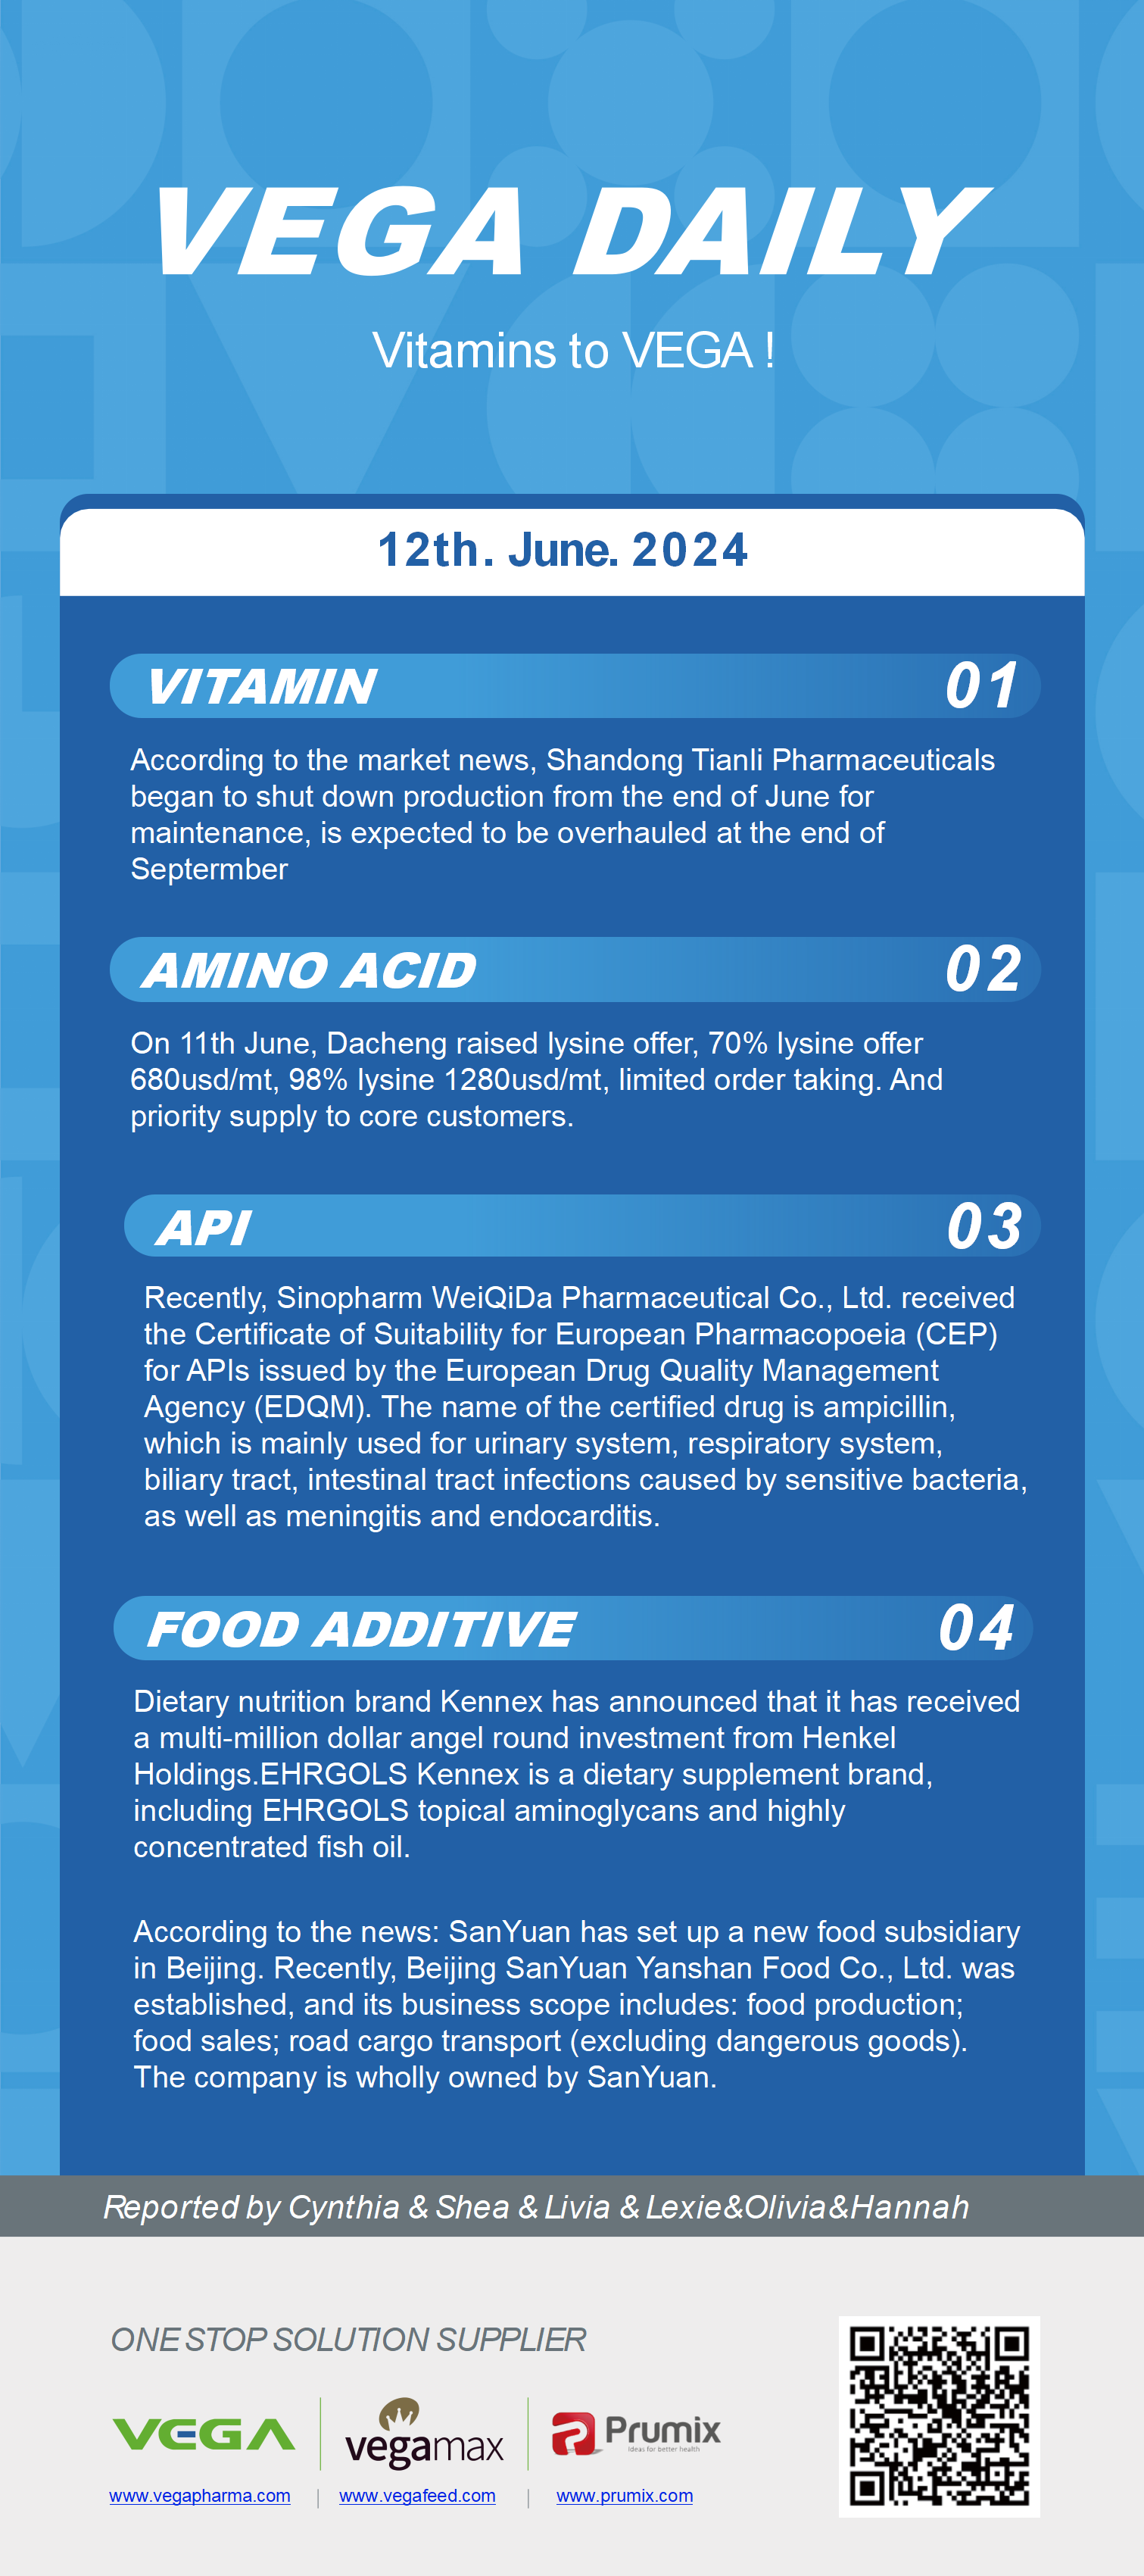 Vega Daily Dated on Jun 12th 2024 Vitamin Amino Acid APl Food Additives.png